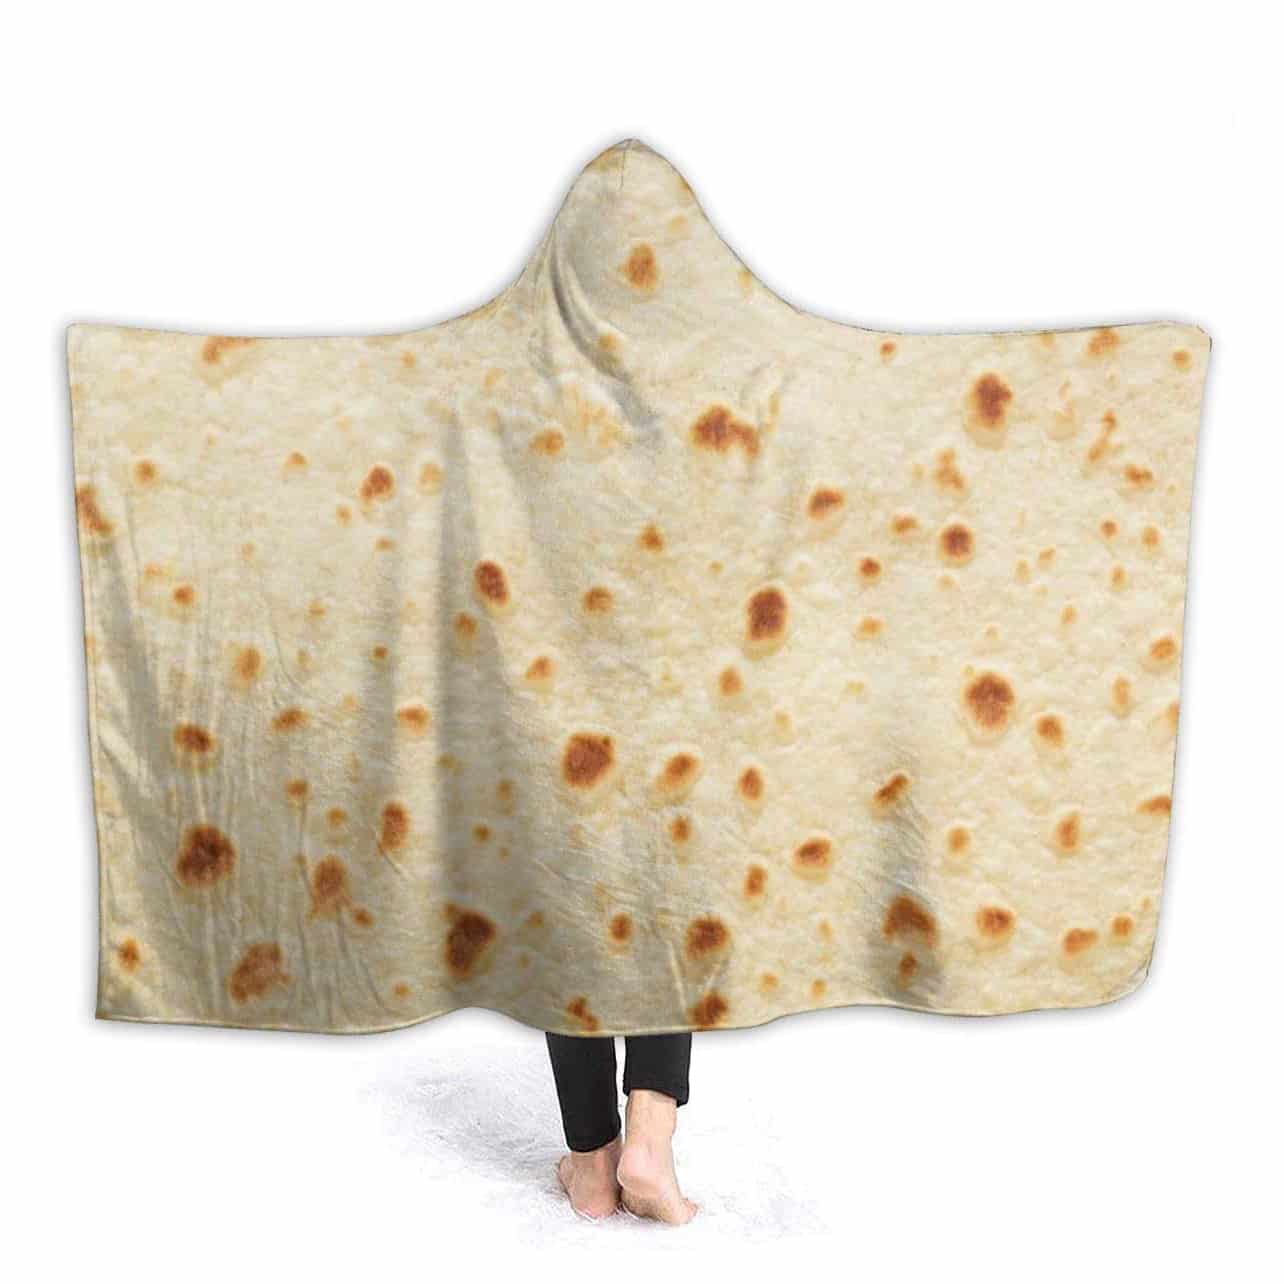 BurritoBlanket™ - A Burrito Styled Blanket